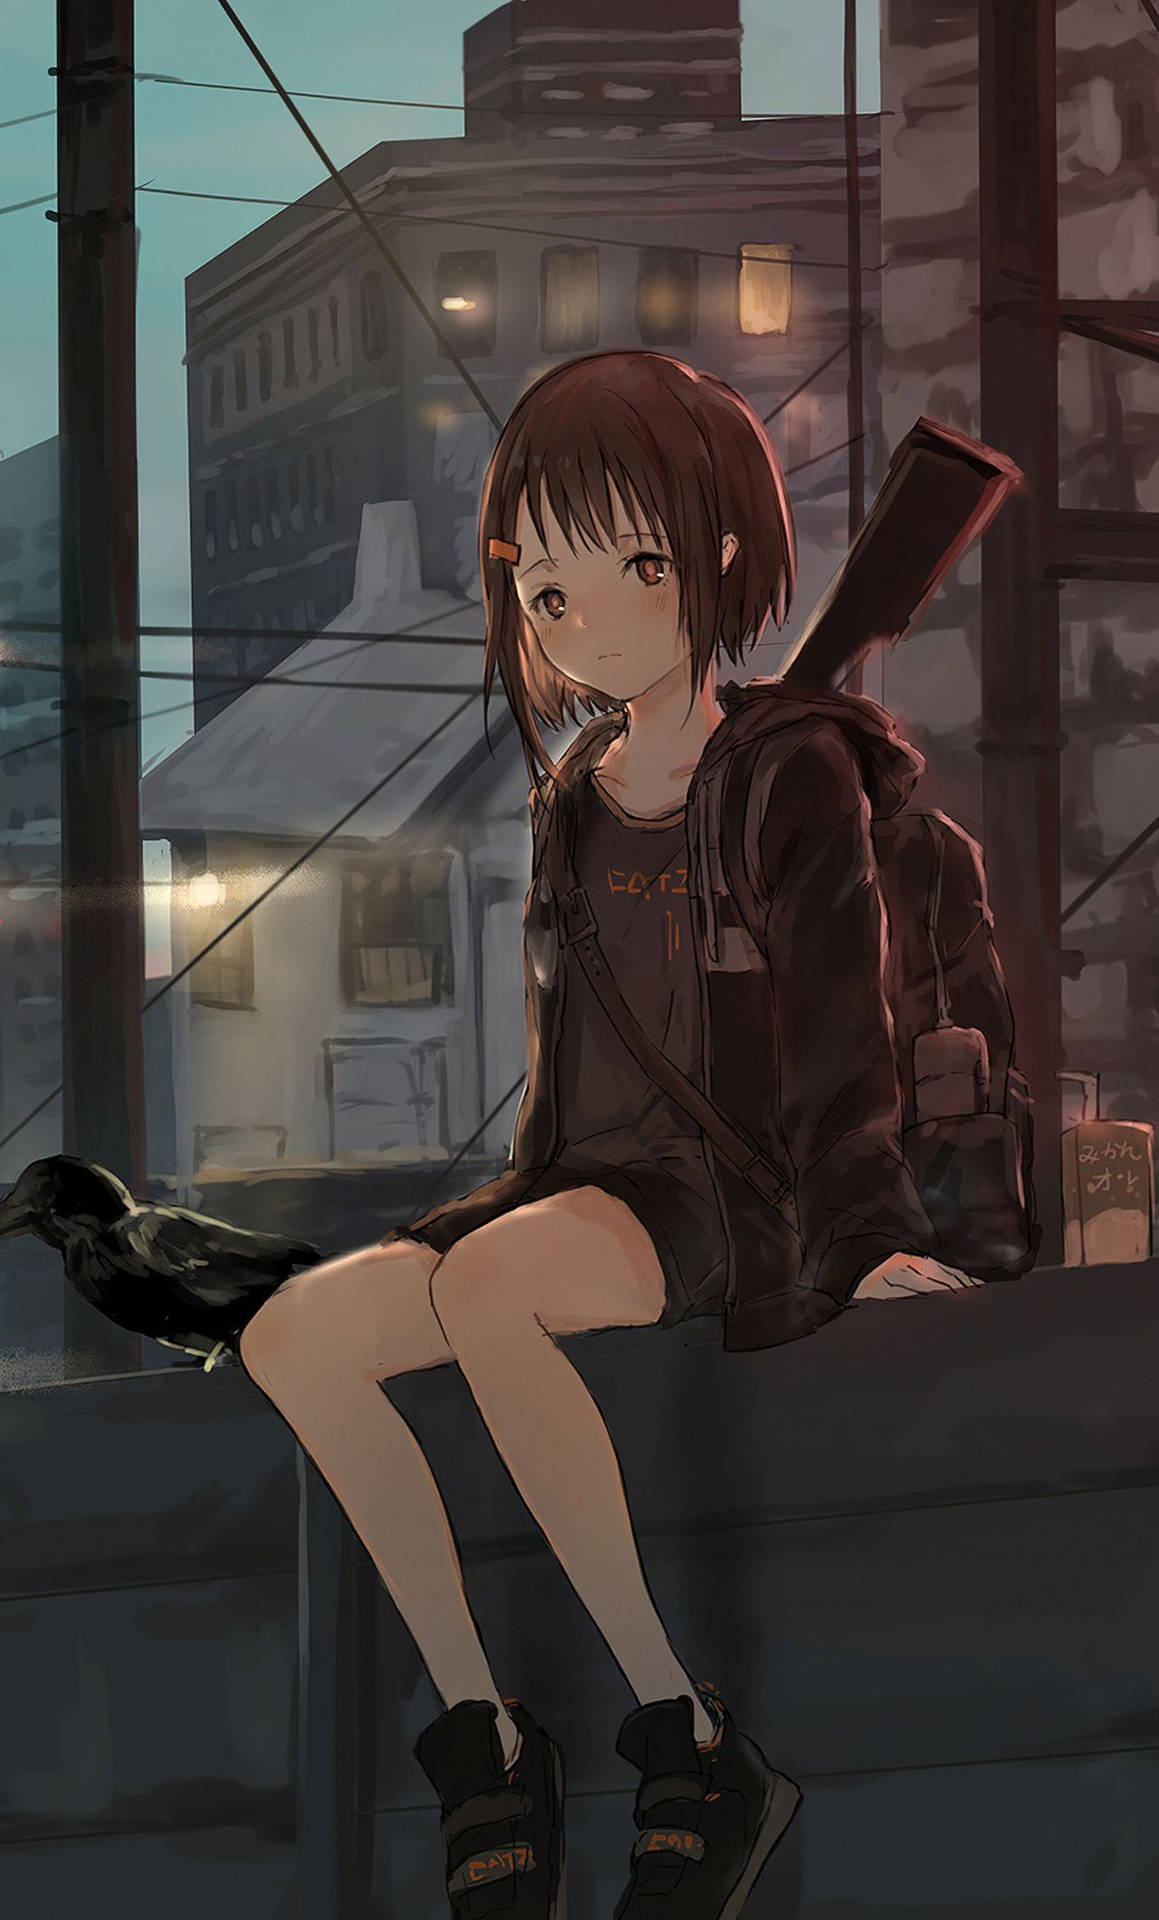 Anime Girl Sad Alone On Ledge